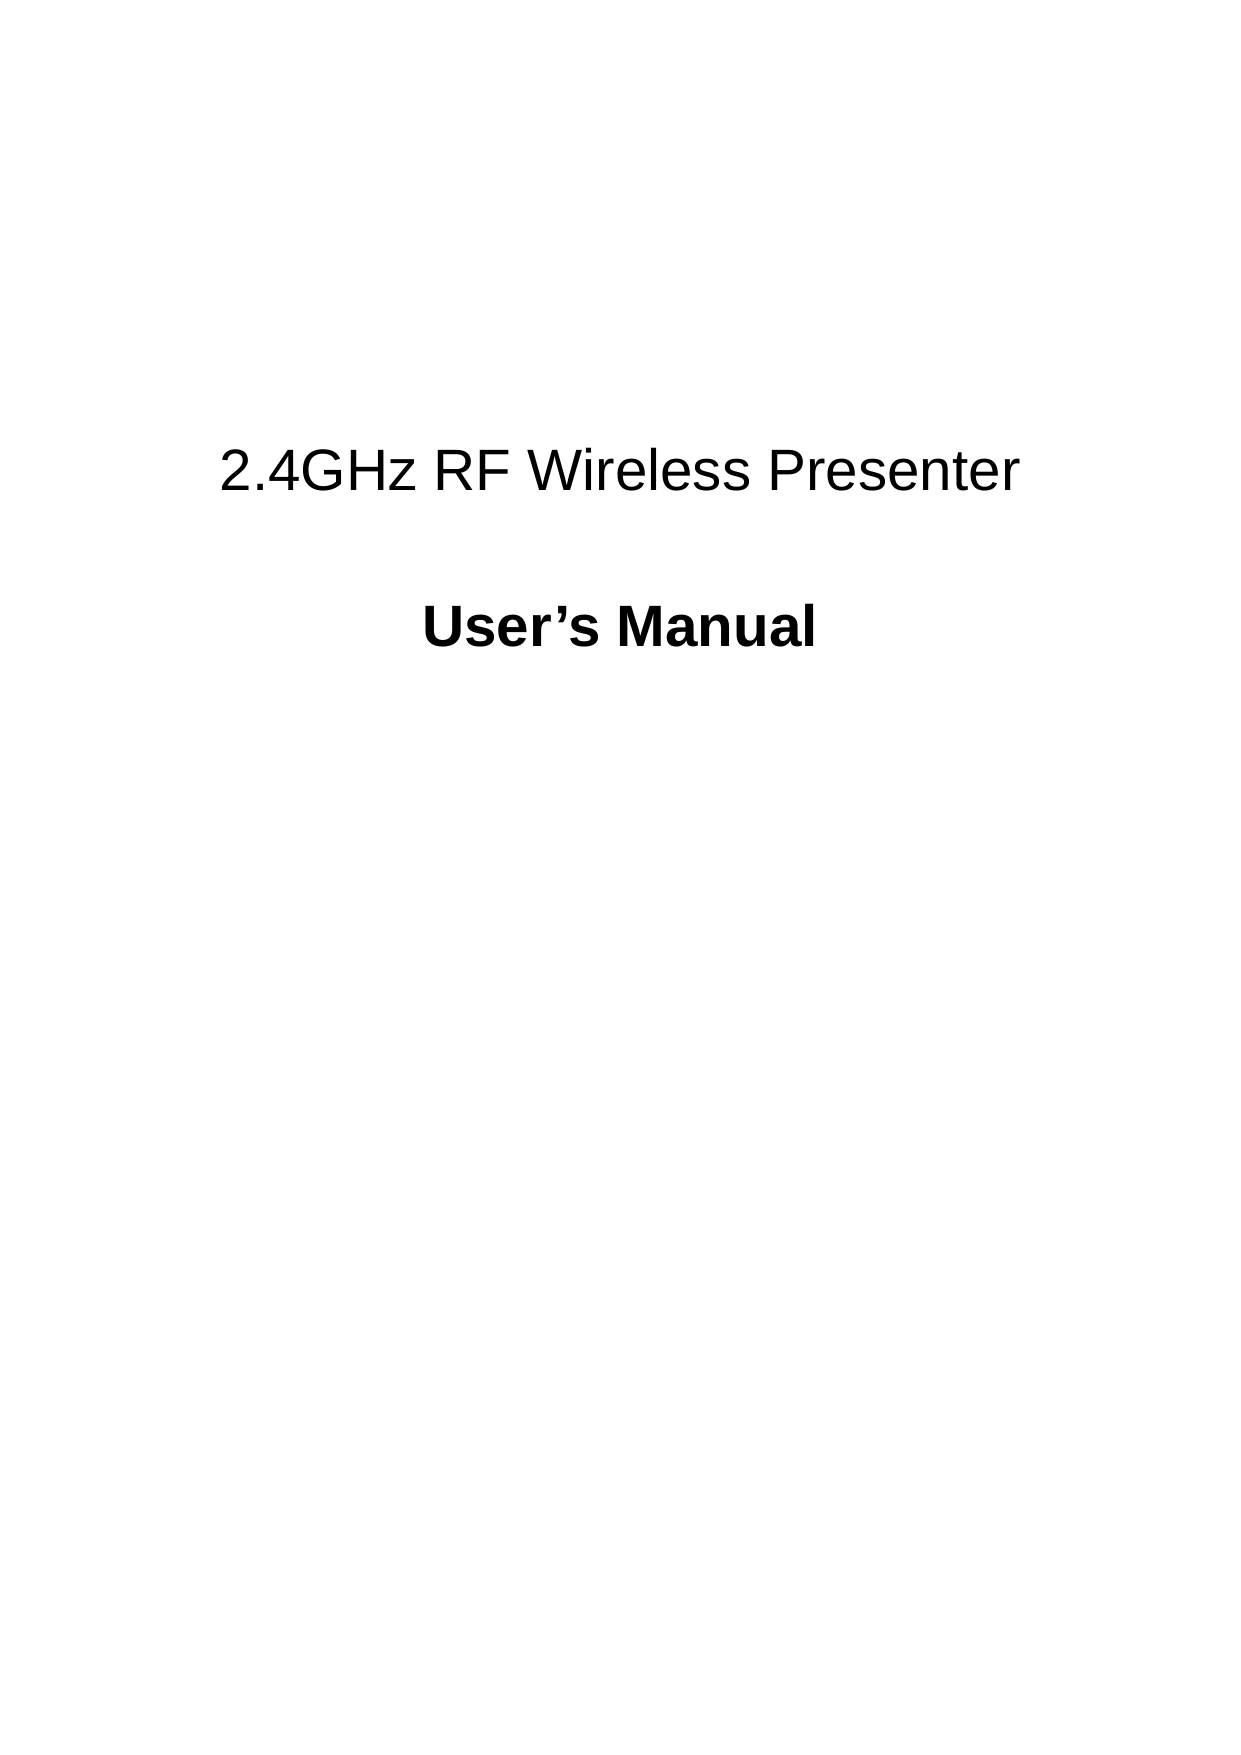     2.4GHz RF Wireless Presenter  User’s Manual  